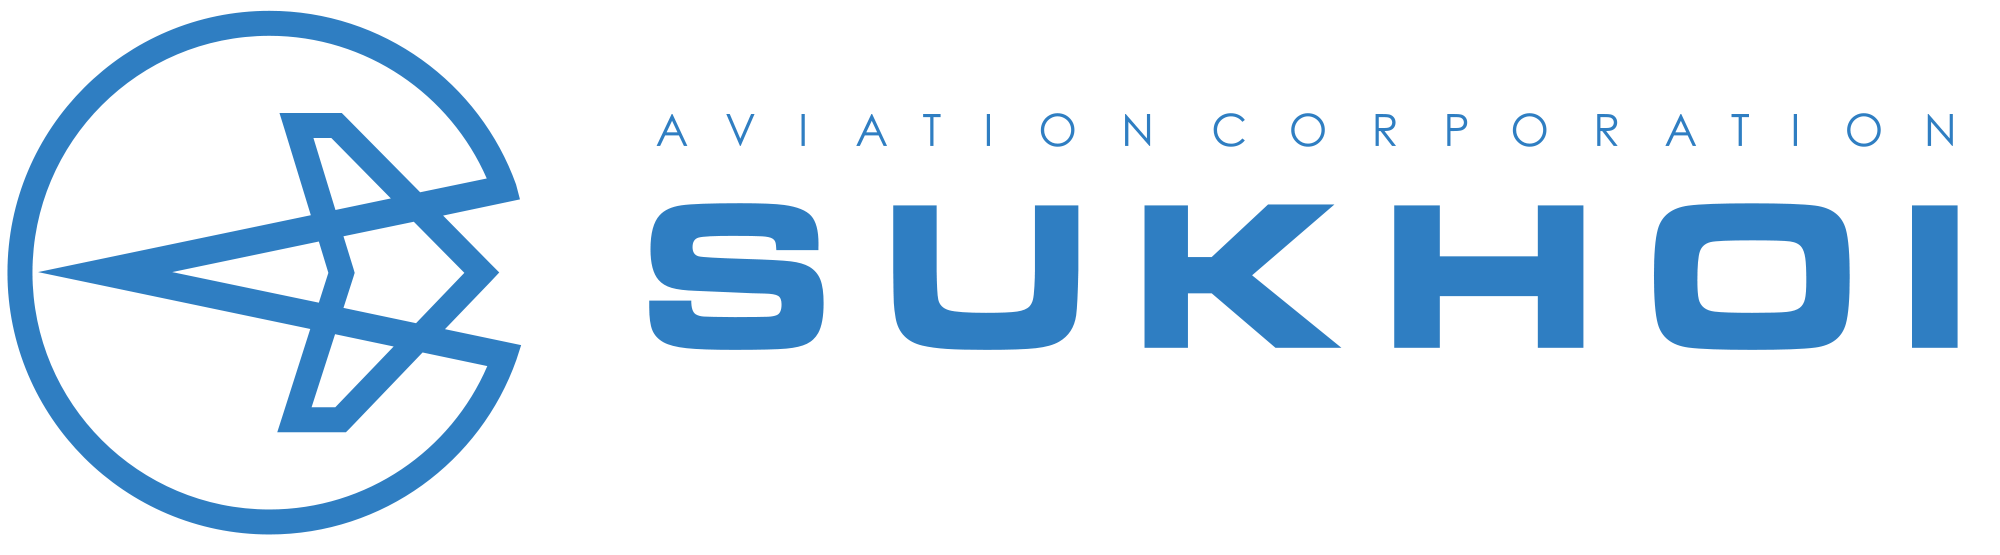 Aircraft Company Logo - Sukhoi Civil Aircraft Company – Aeroengineer.org